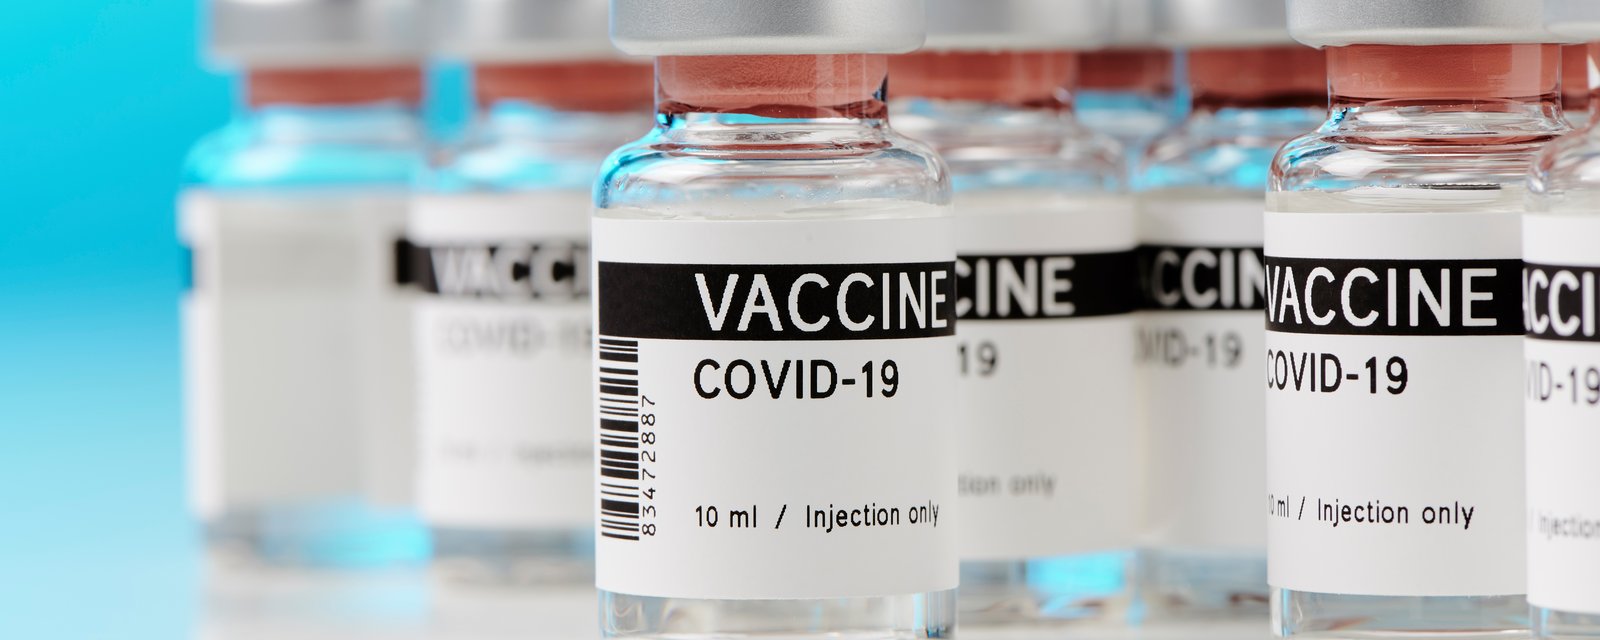 Un homme a reçu volontairement 217 doses de vaccins contre la COVID-19.